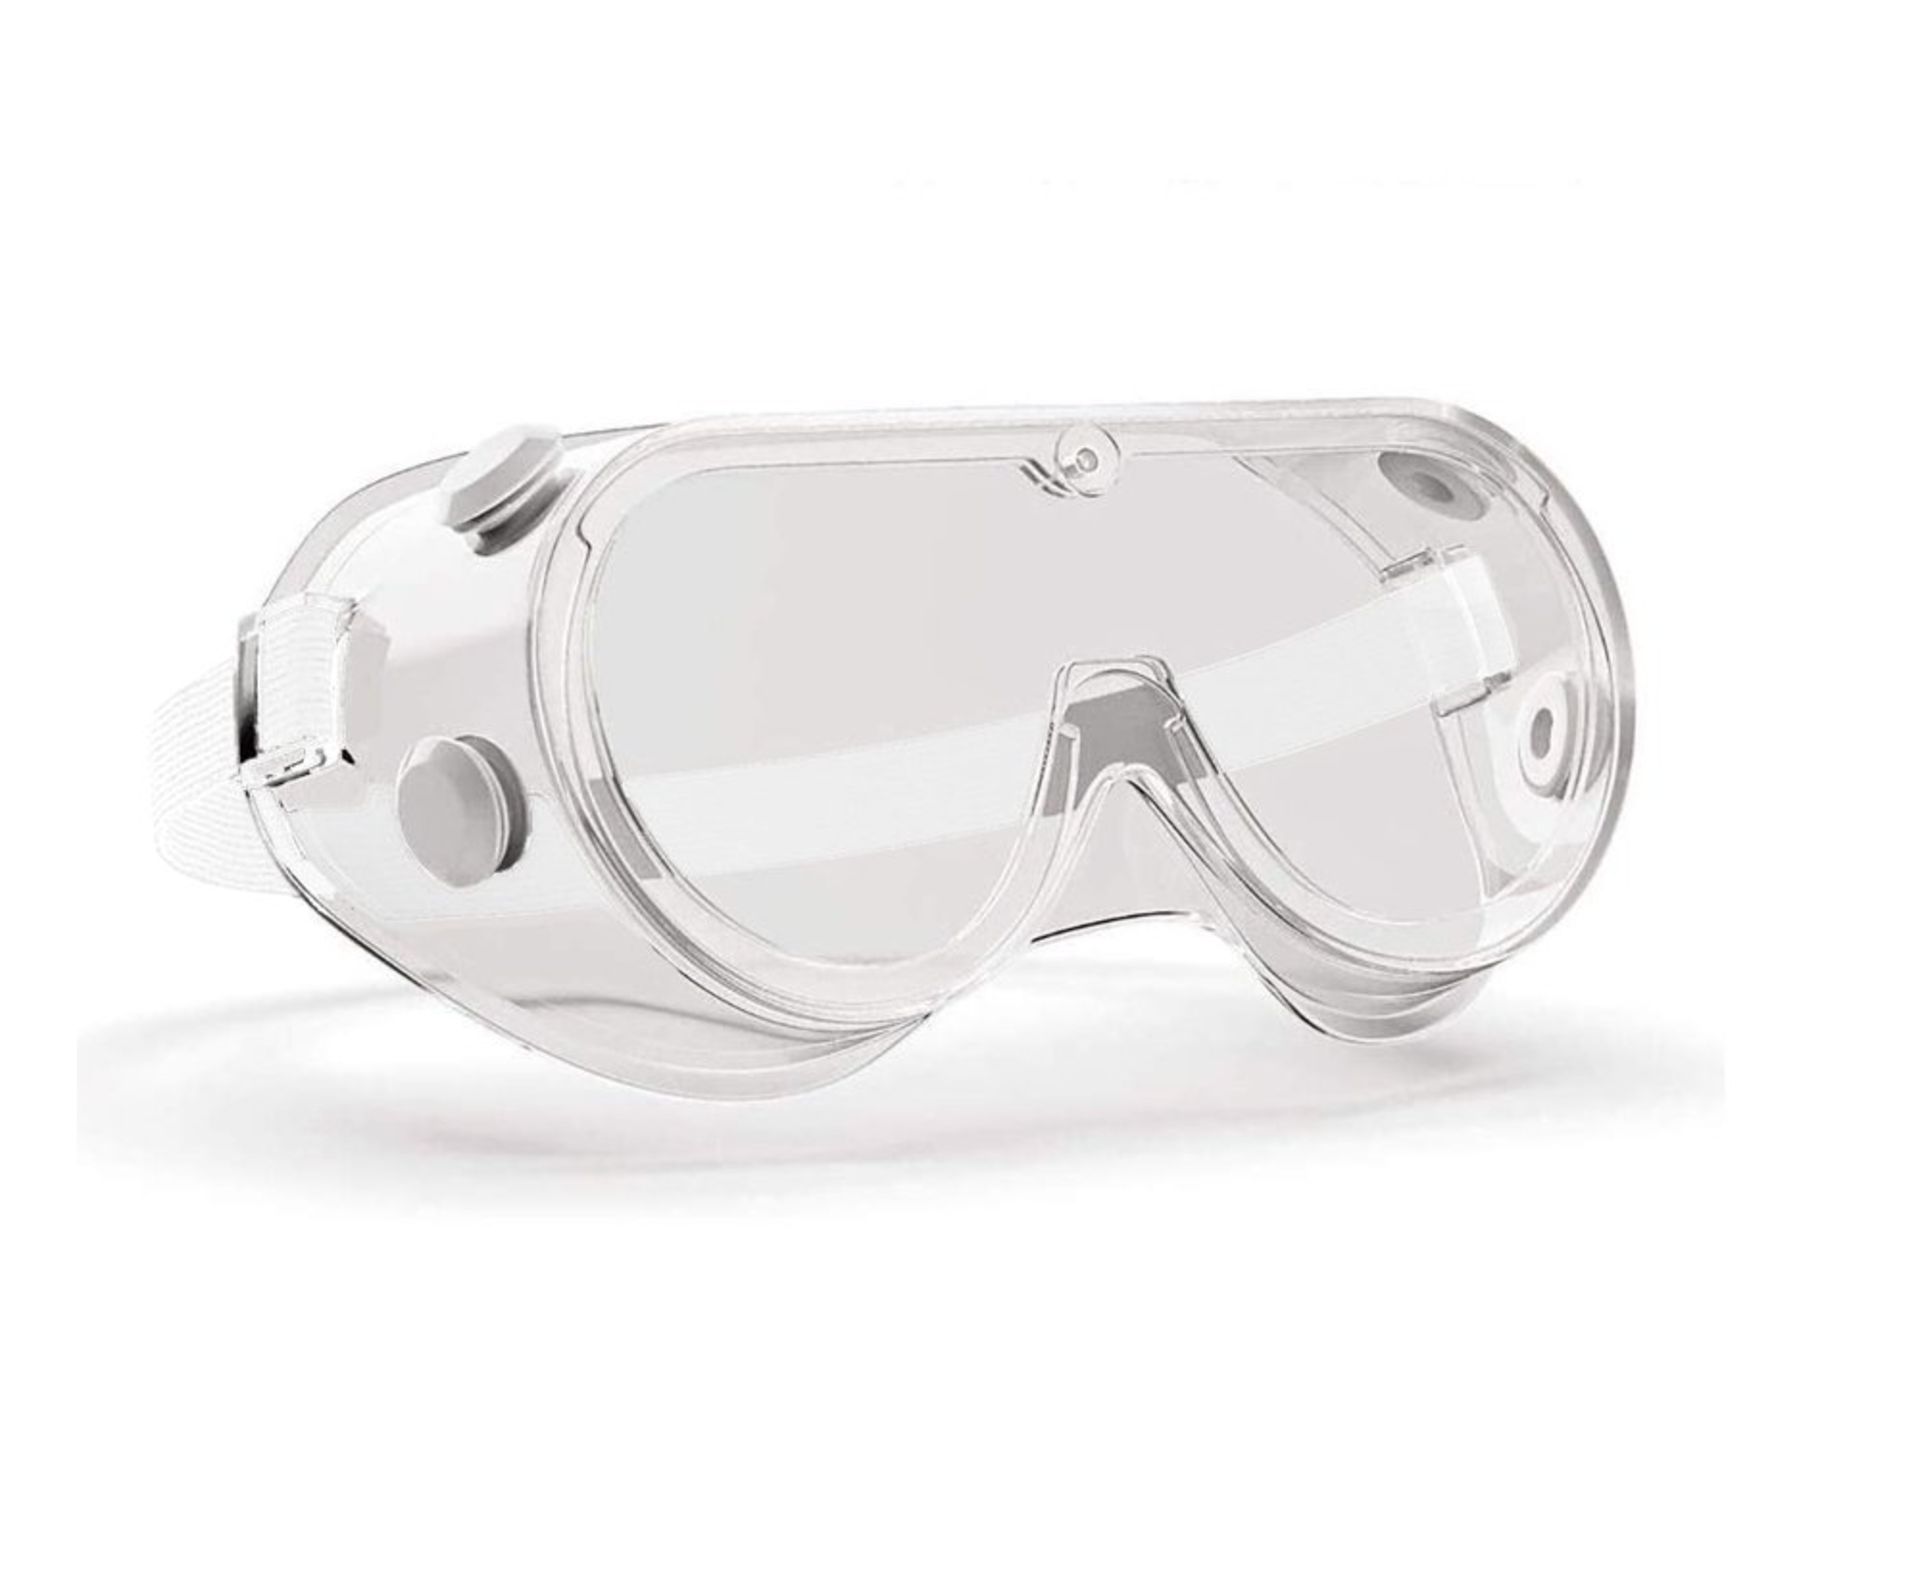 Box of 10 Bolle Safety Overlight 2 Protective Eyewear